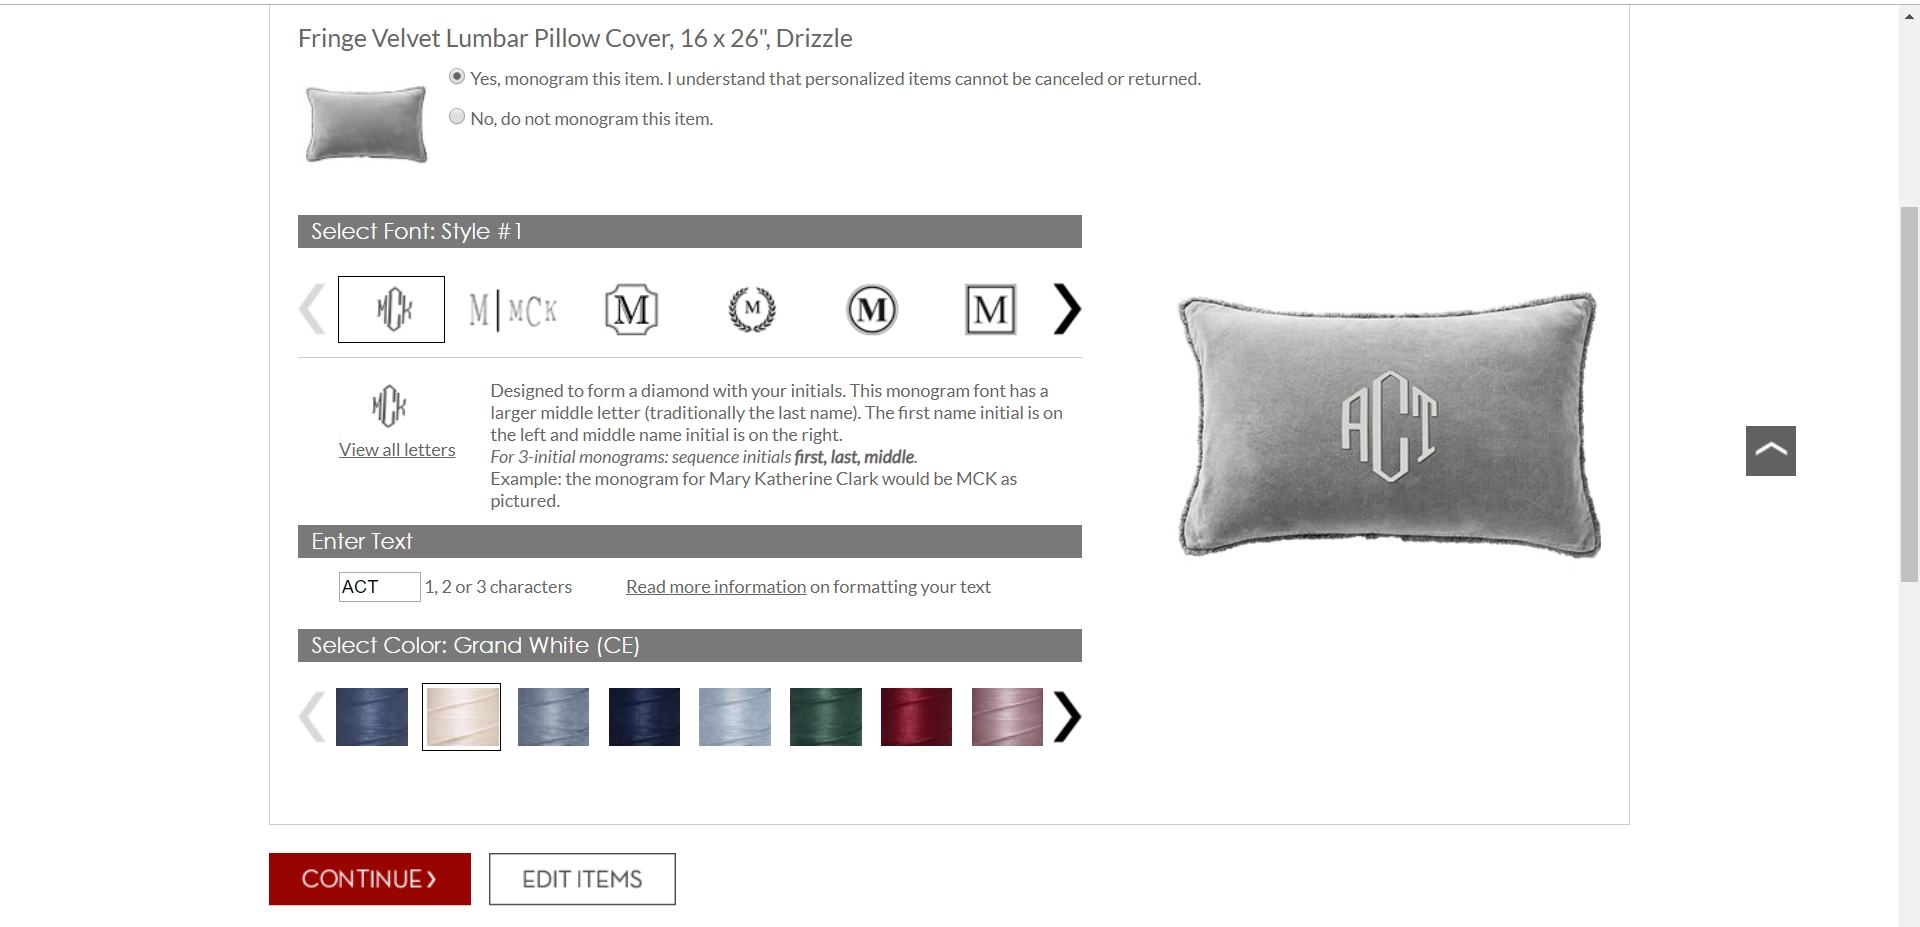 Fringe Velvet Lumbar Pillow Cover, 16 x 26", Drizzle - Monogrammed - Style 1, Grand White, ACT - Image 3